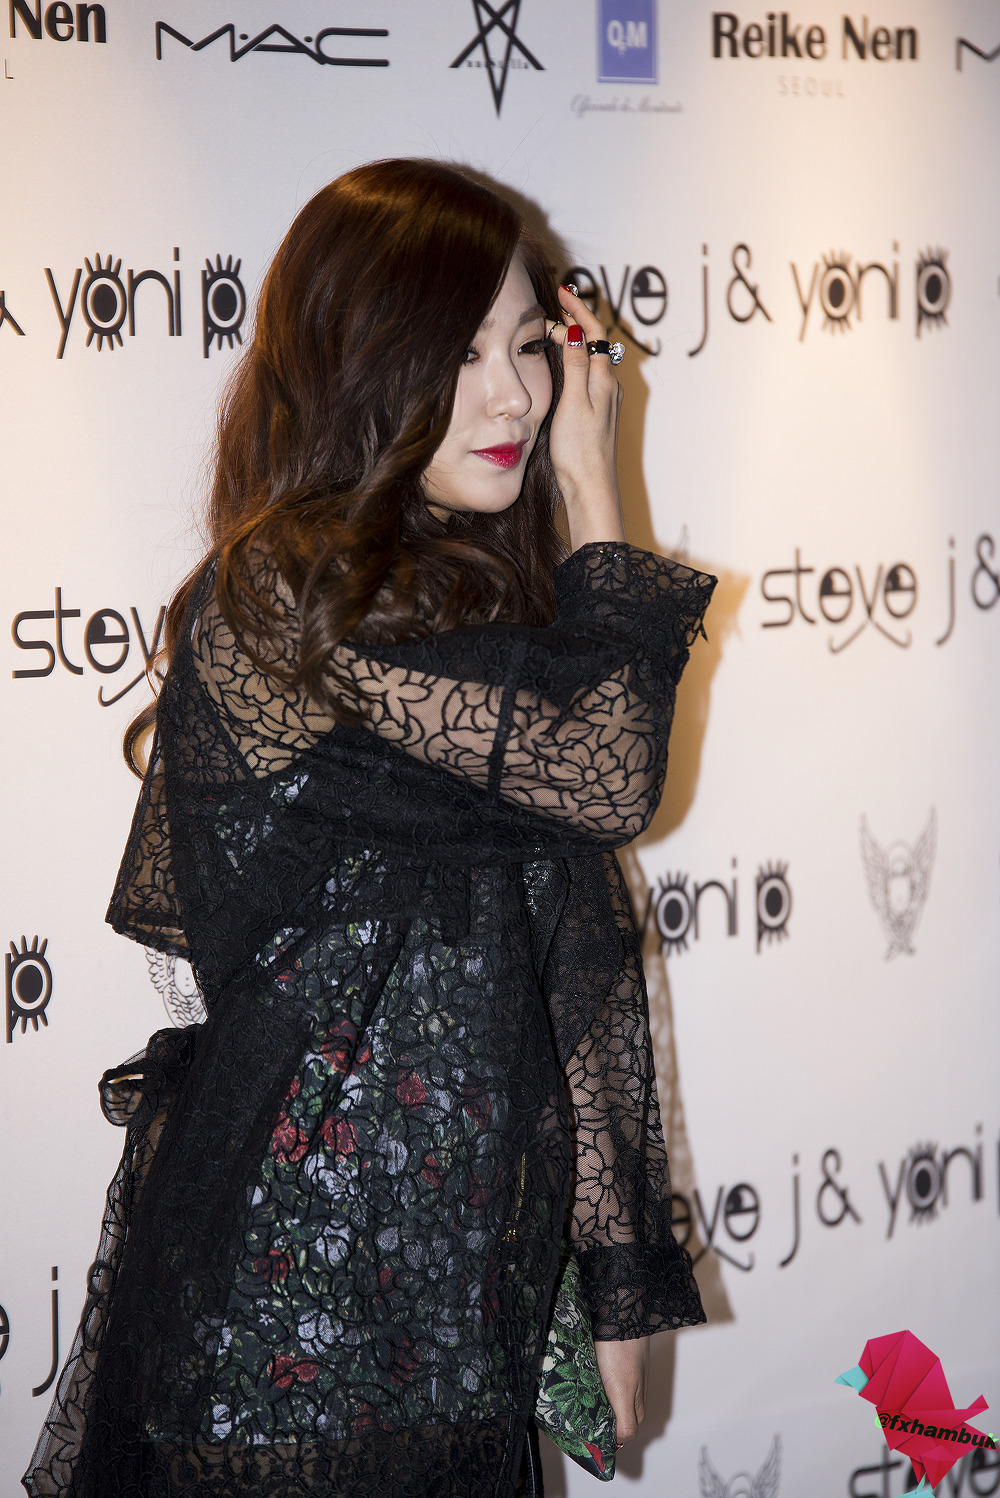 [PIC][24-03-201]Tiffany tham dự "Steve J & Yoni P 2014 F/W Seoul Fashion Week" vào trưa nay 276CCD4B532FE92A1F05C1